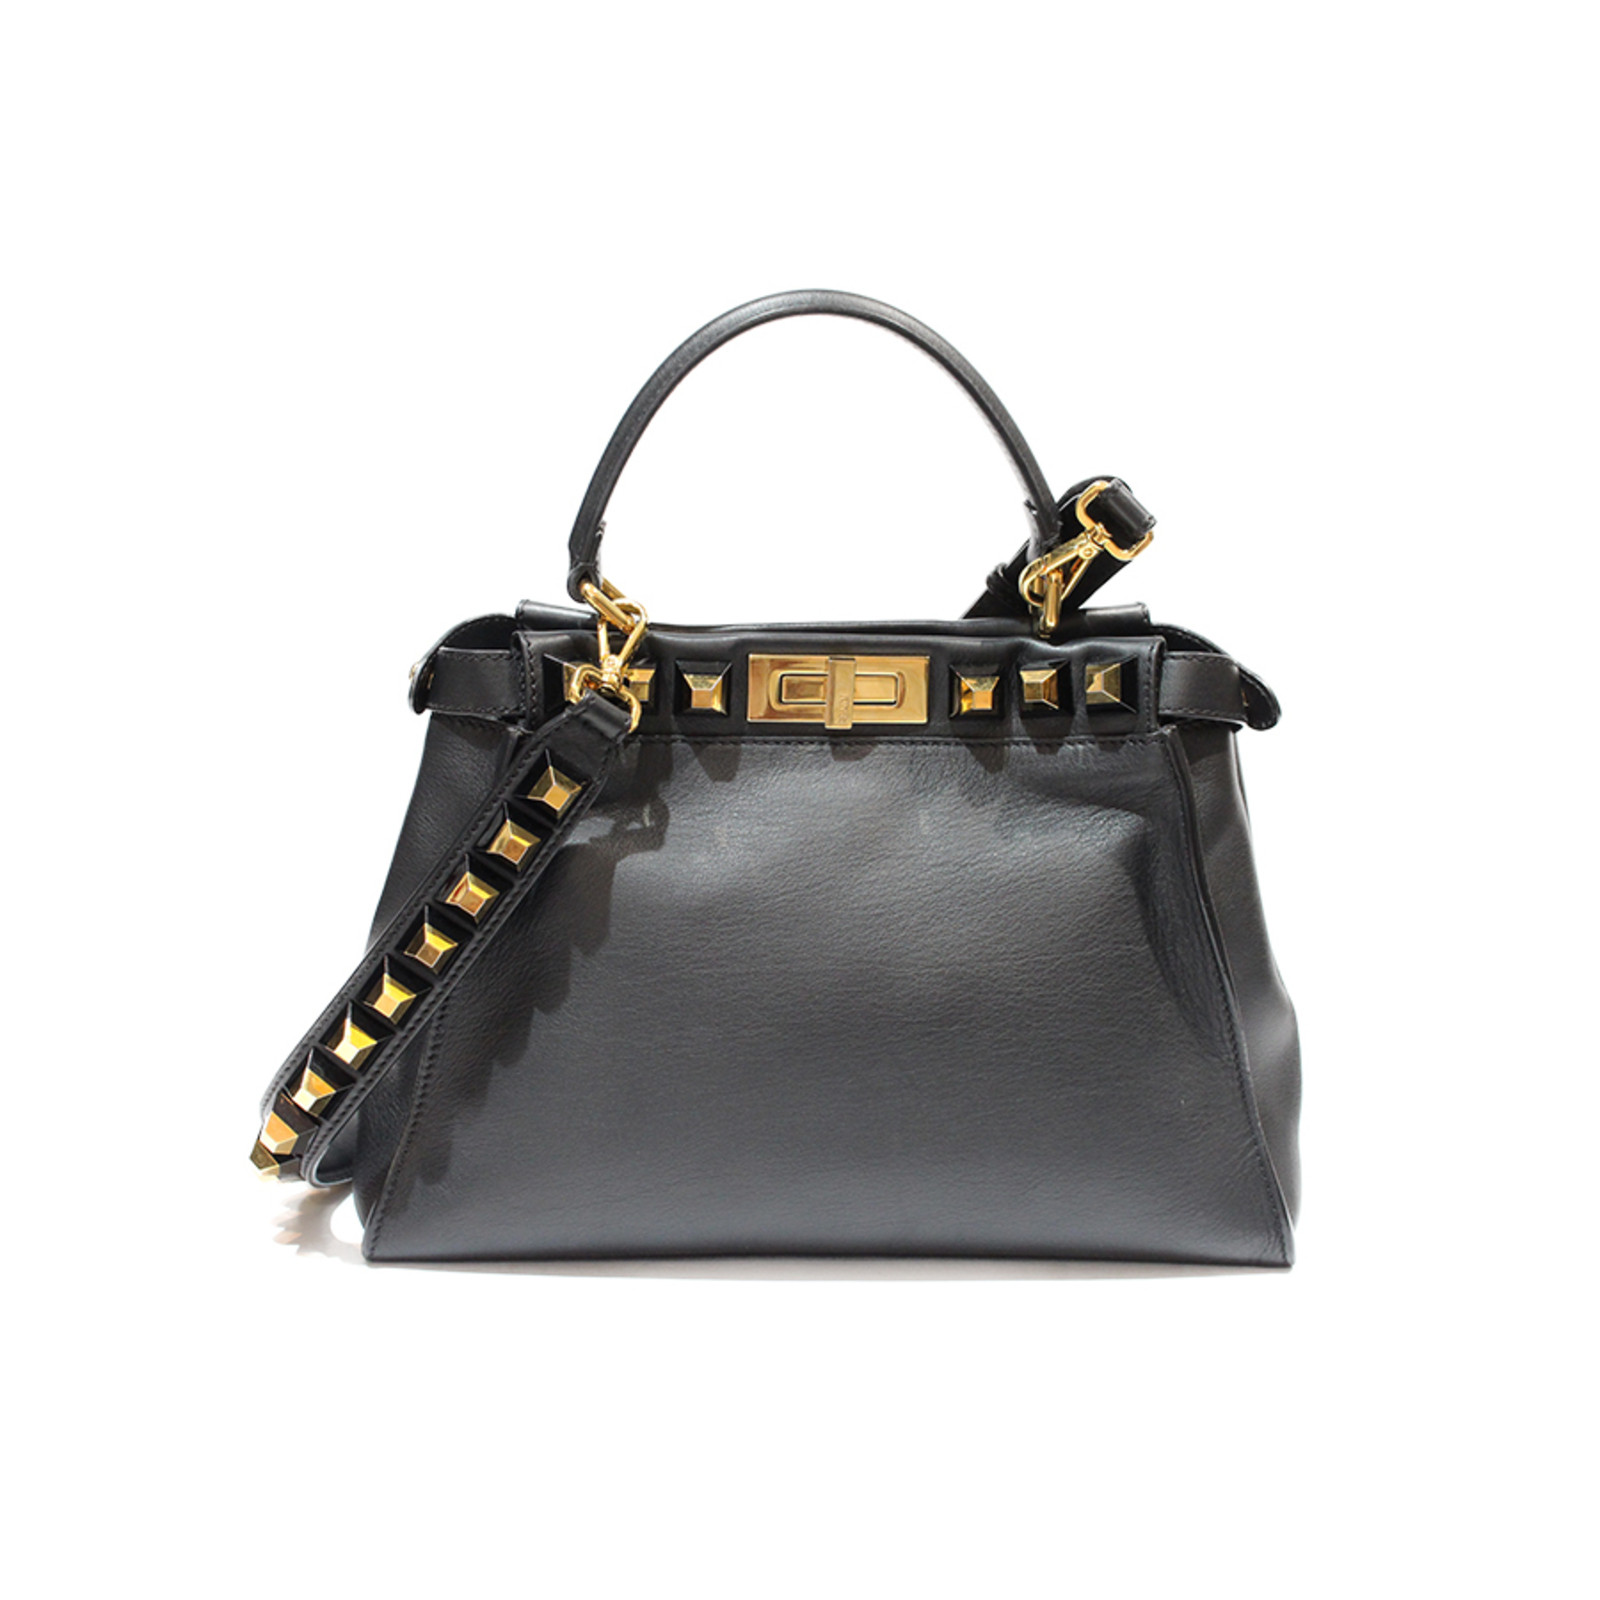 Fendi Peekaboo Bag Leather in Black - Second Hand Fendi Peekaboo Bag  Leather in Black buy used for 2500€ (4520744)